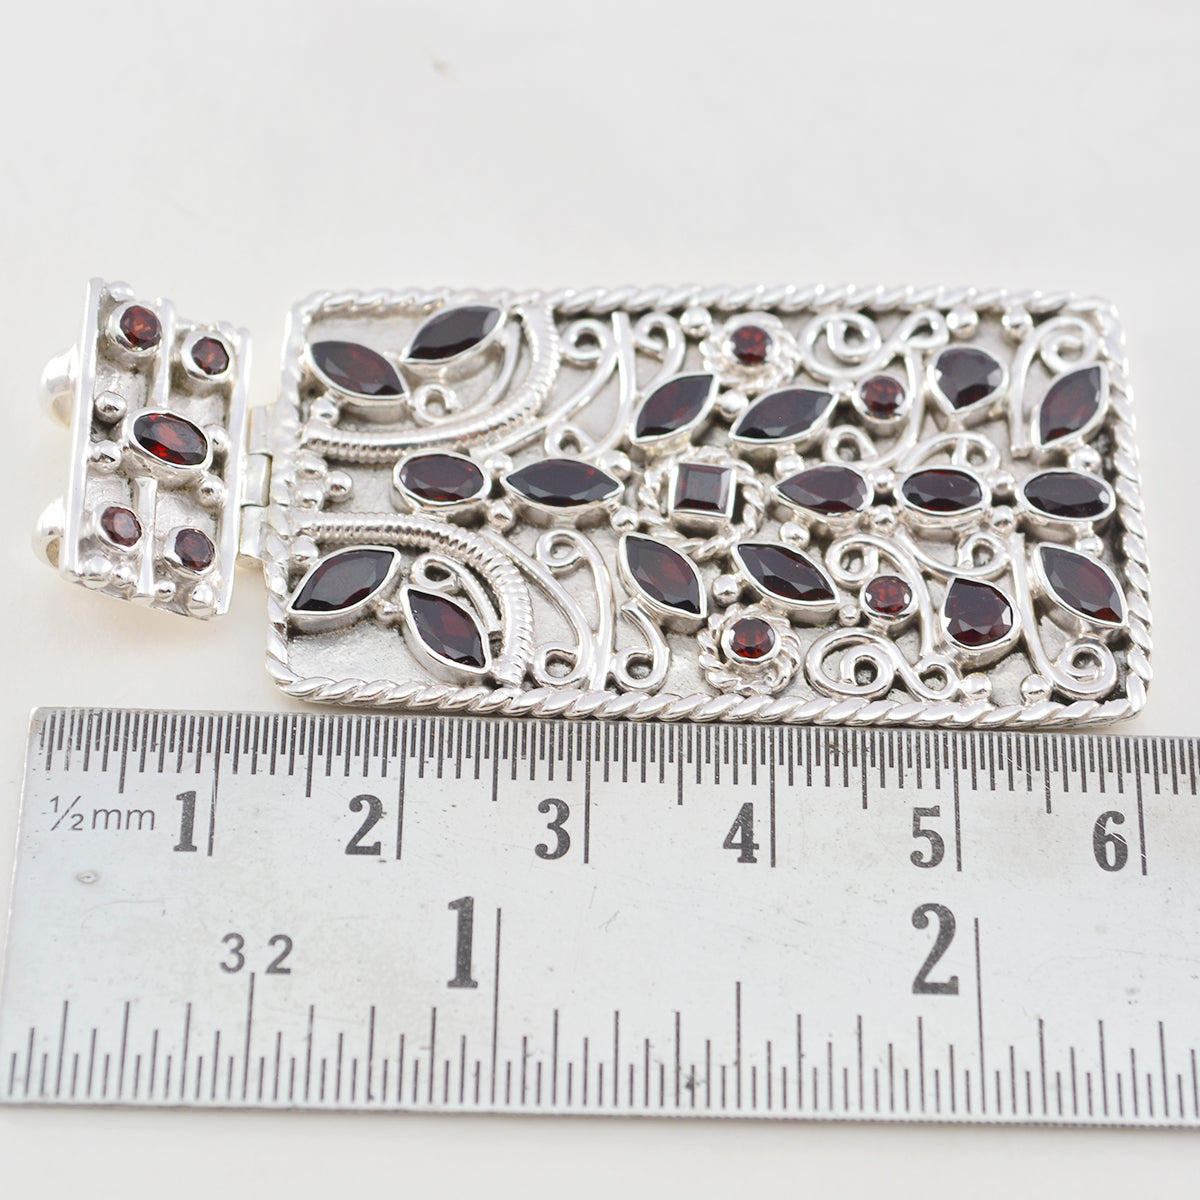 Riyo Natural Gemstone Multi Shape Faceted Red Garnet Sterling Silver Pendants gift for sister